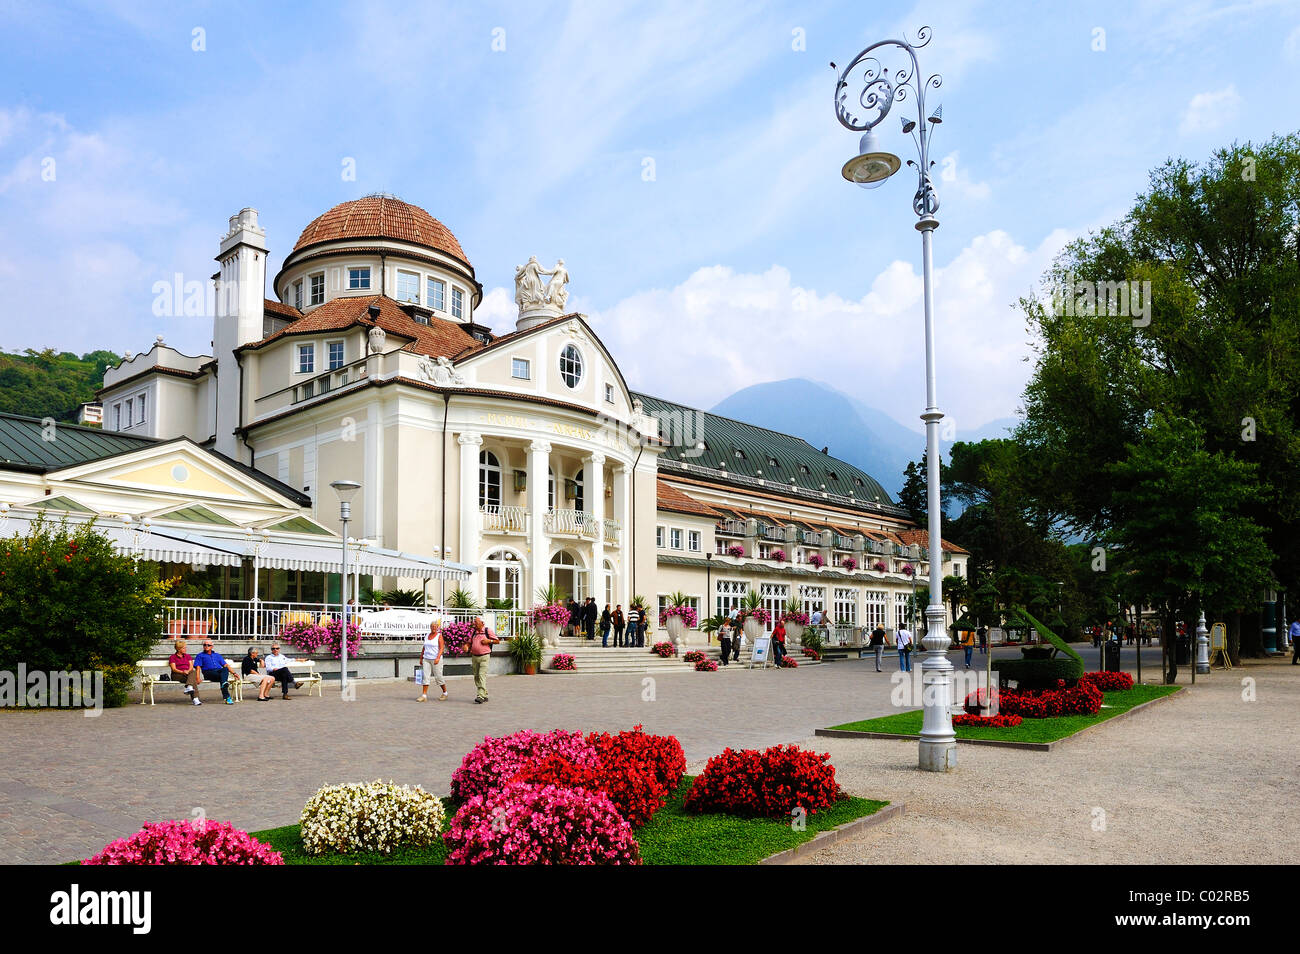 Hôtel spa Promenade, Merano, le Tyrol du Sud, Italie, Europe Banque D'Images